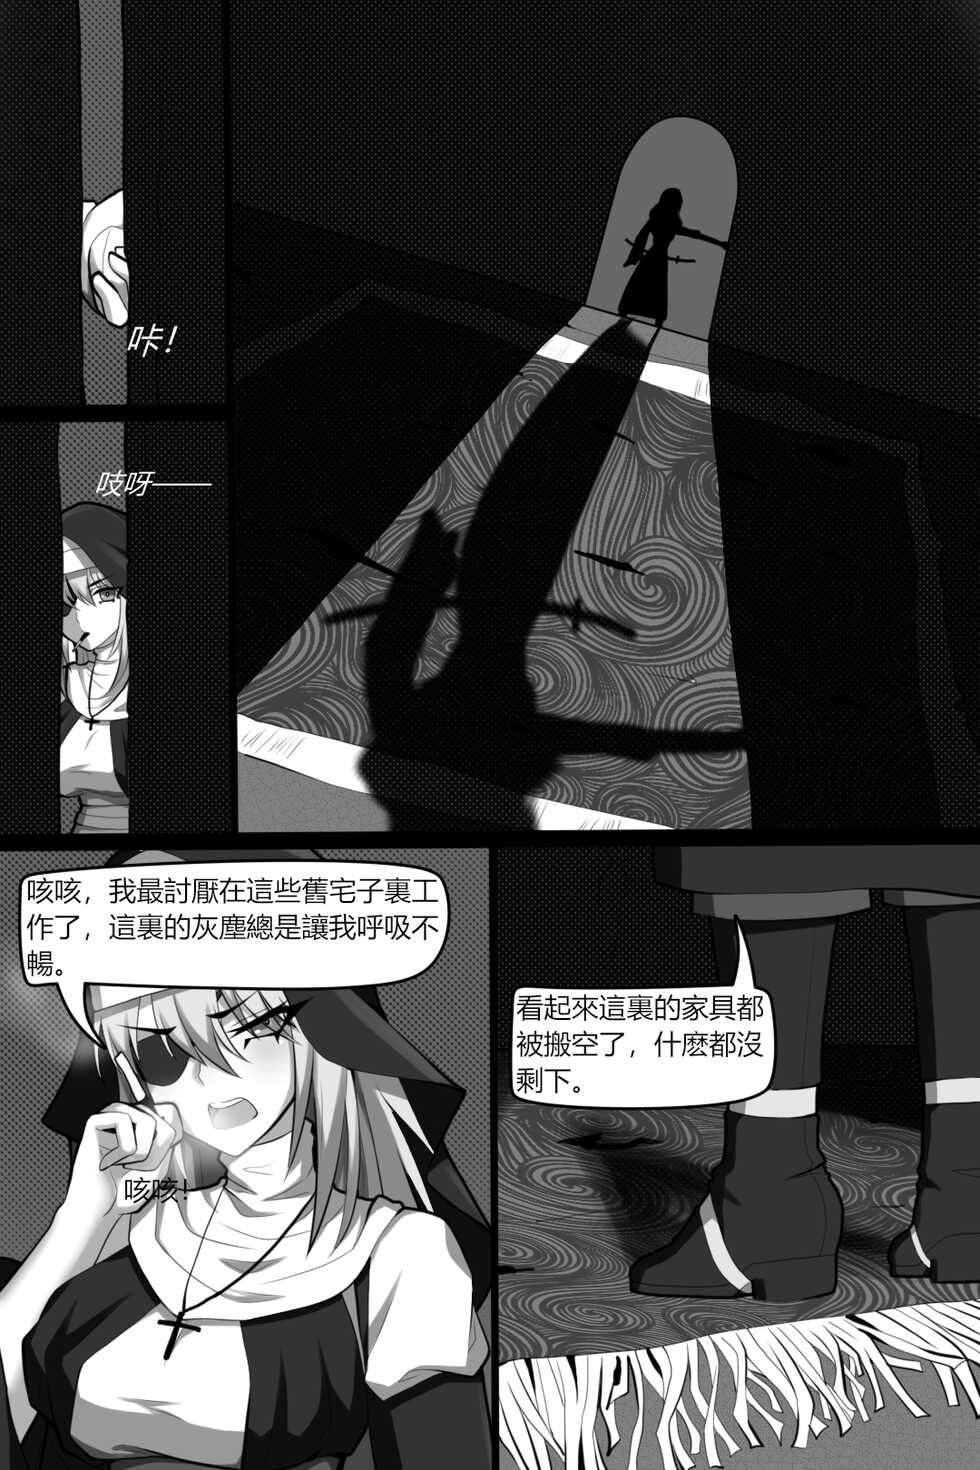 [Wushui]  Bin Lian City Stories Ch2: Exorcist Nun. - Page 4